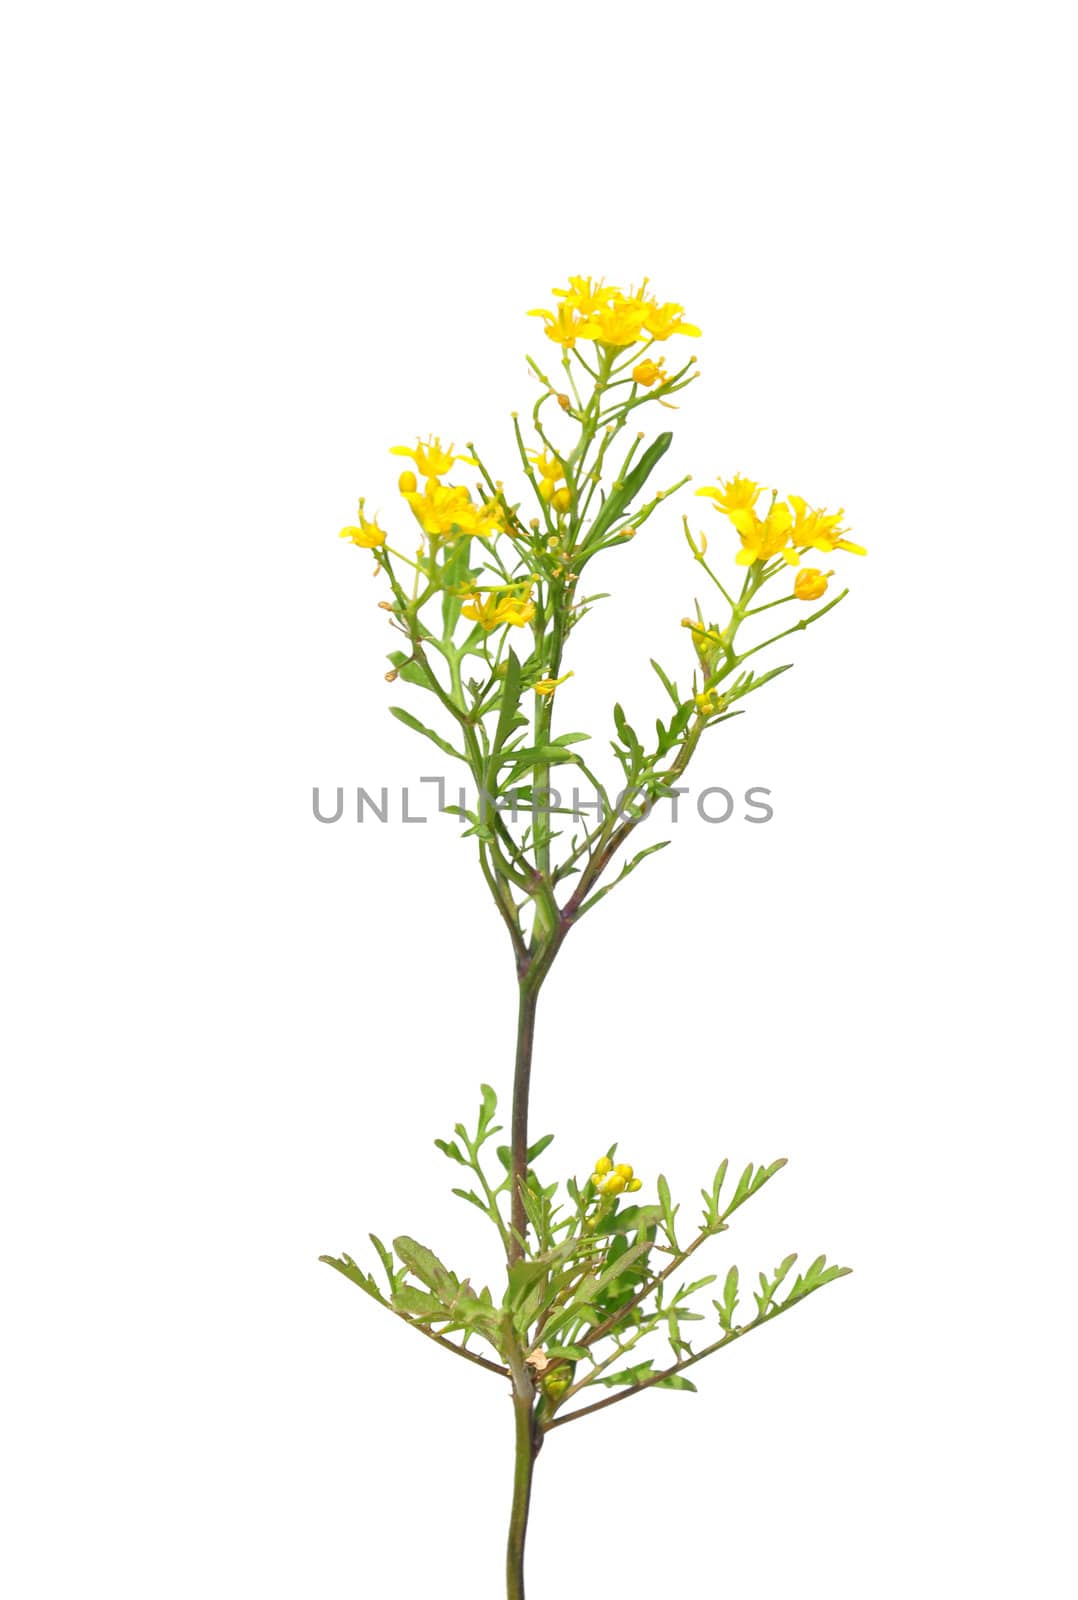 Creeping yellowcress (Rorippa sylvestris)